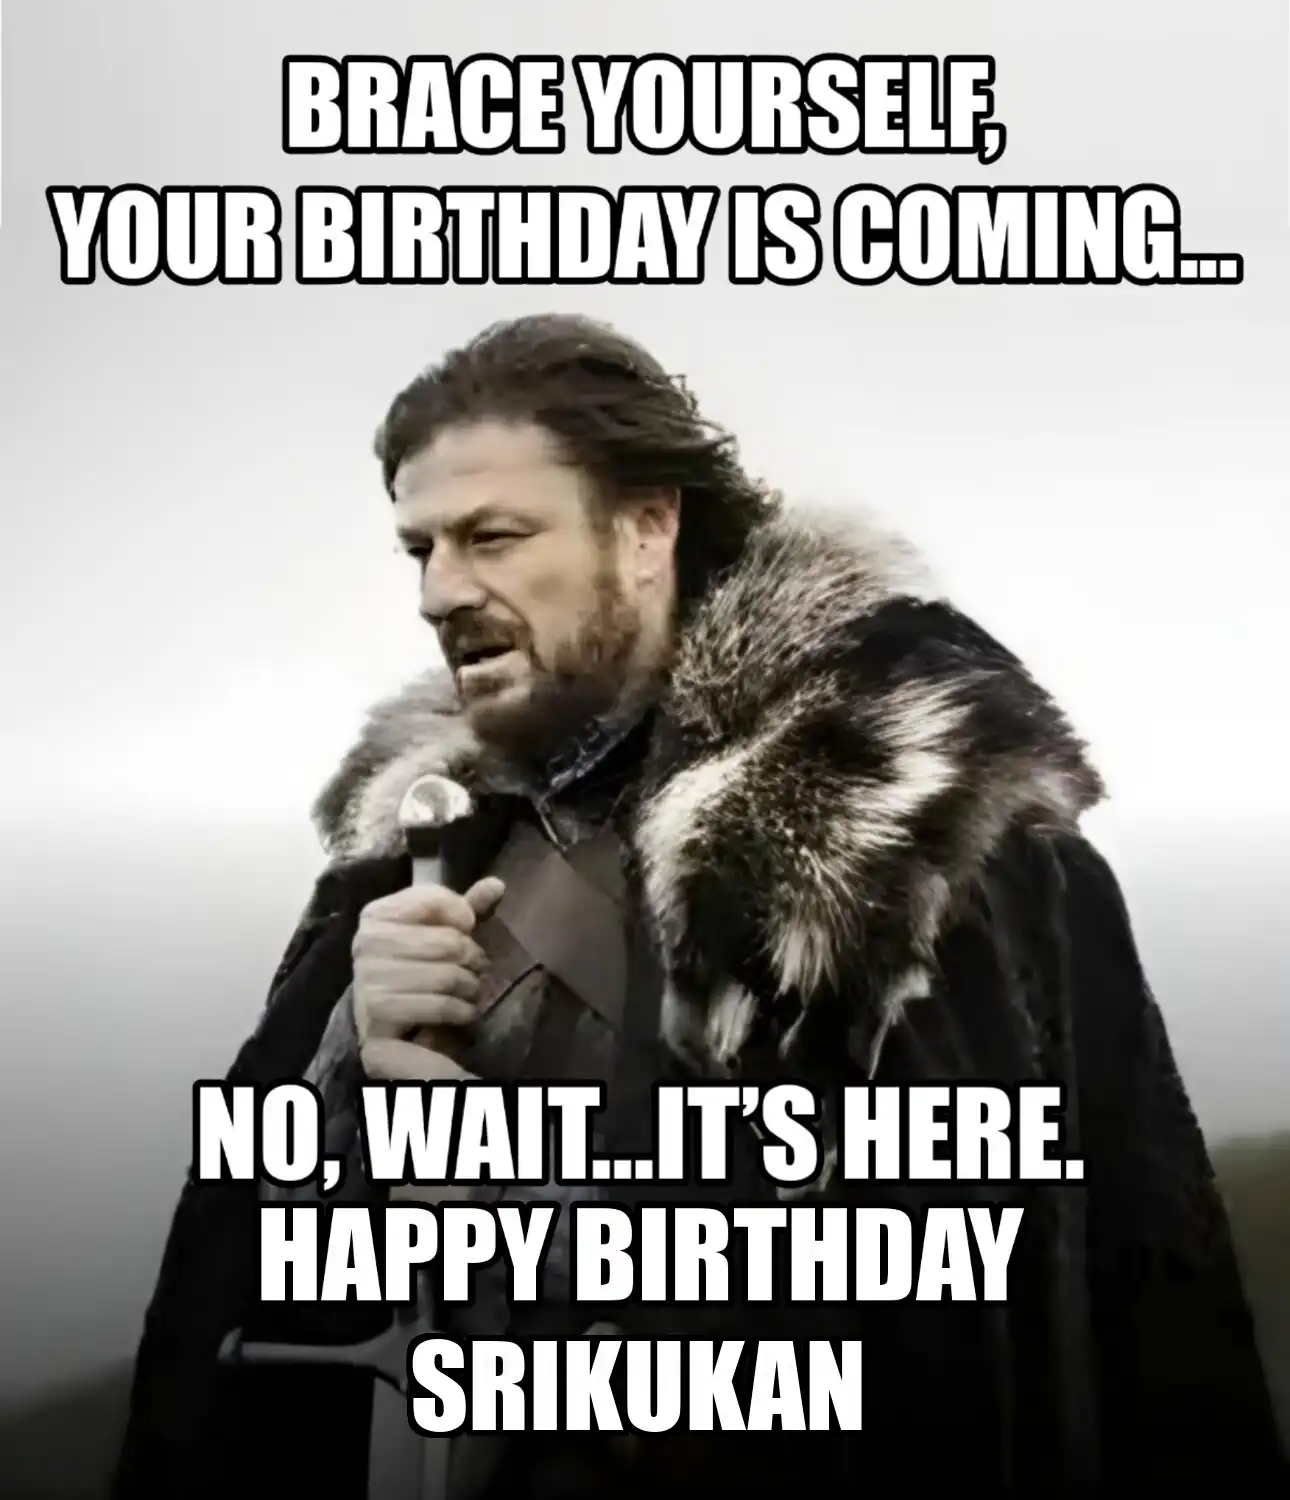 Happy Birthday Srikukan Brace Yourself Your Birthday Is Coming Meme